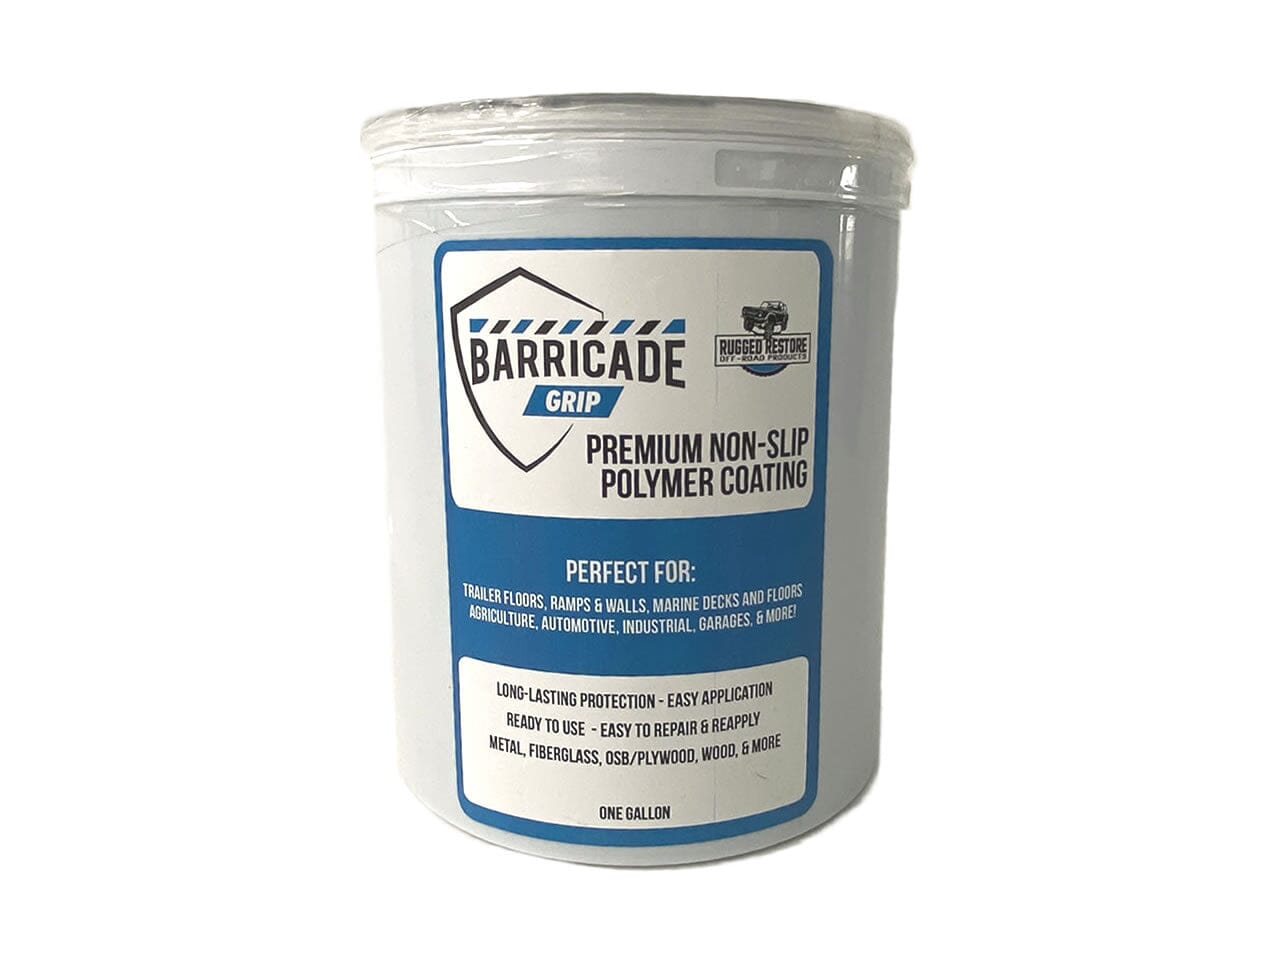 Barricade Grip Premium Non-Slip Polymer Coating Coatings Gray - Single Gallon 